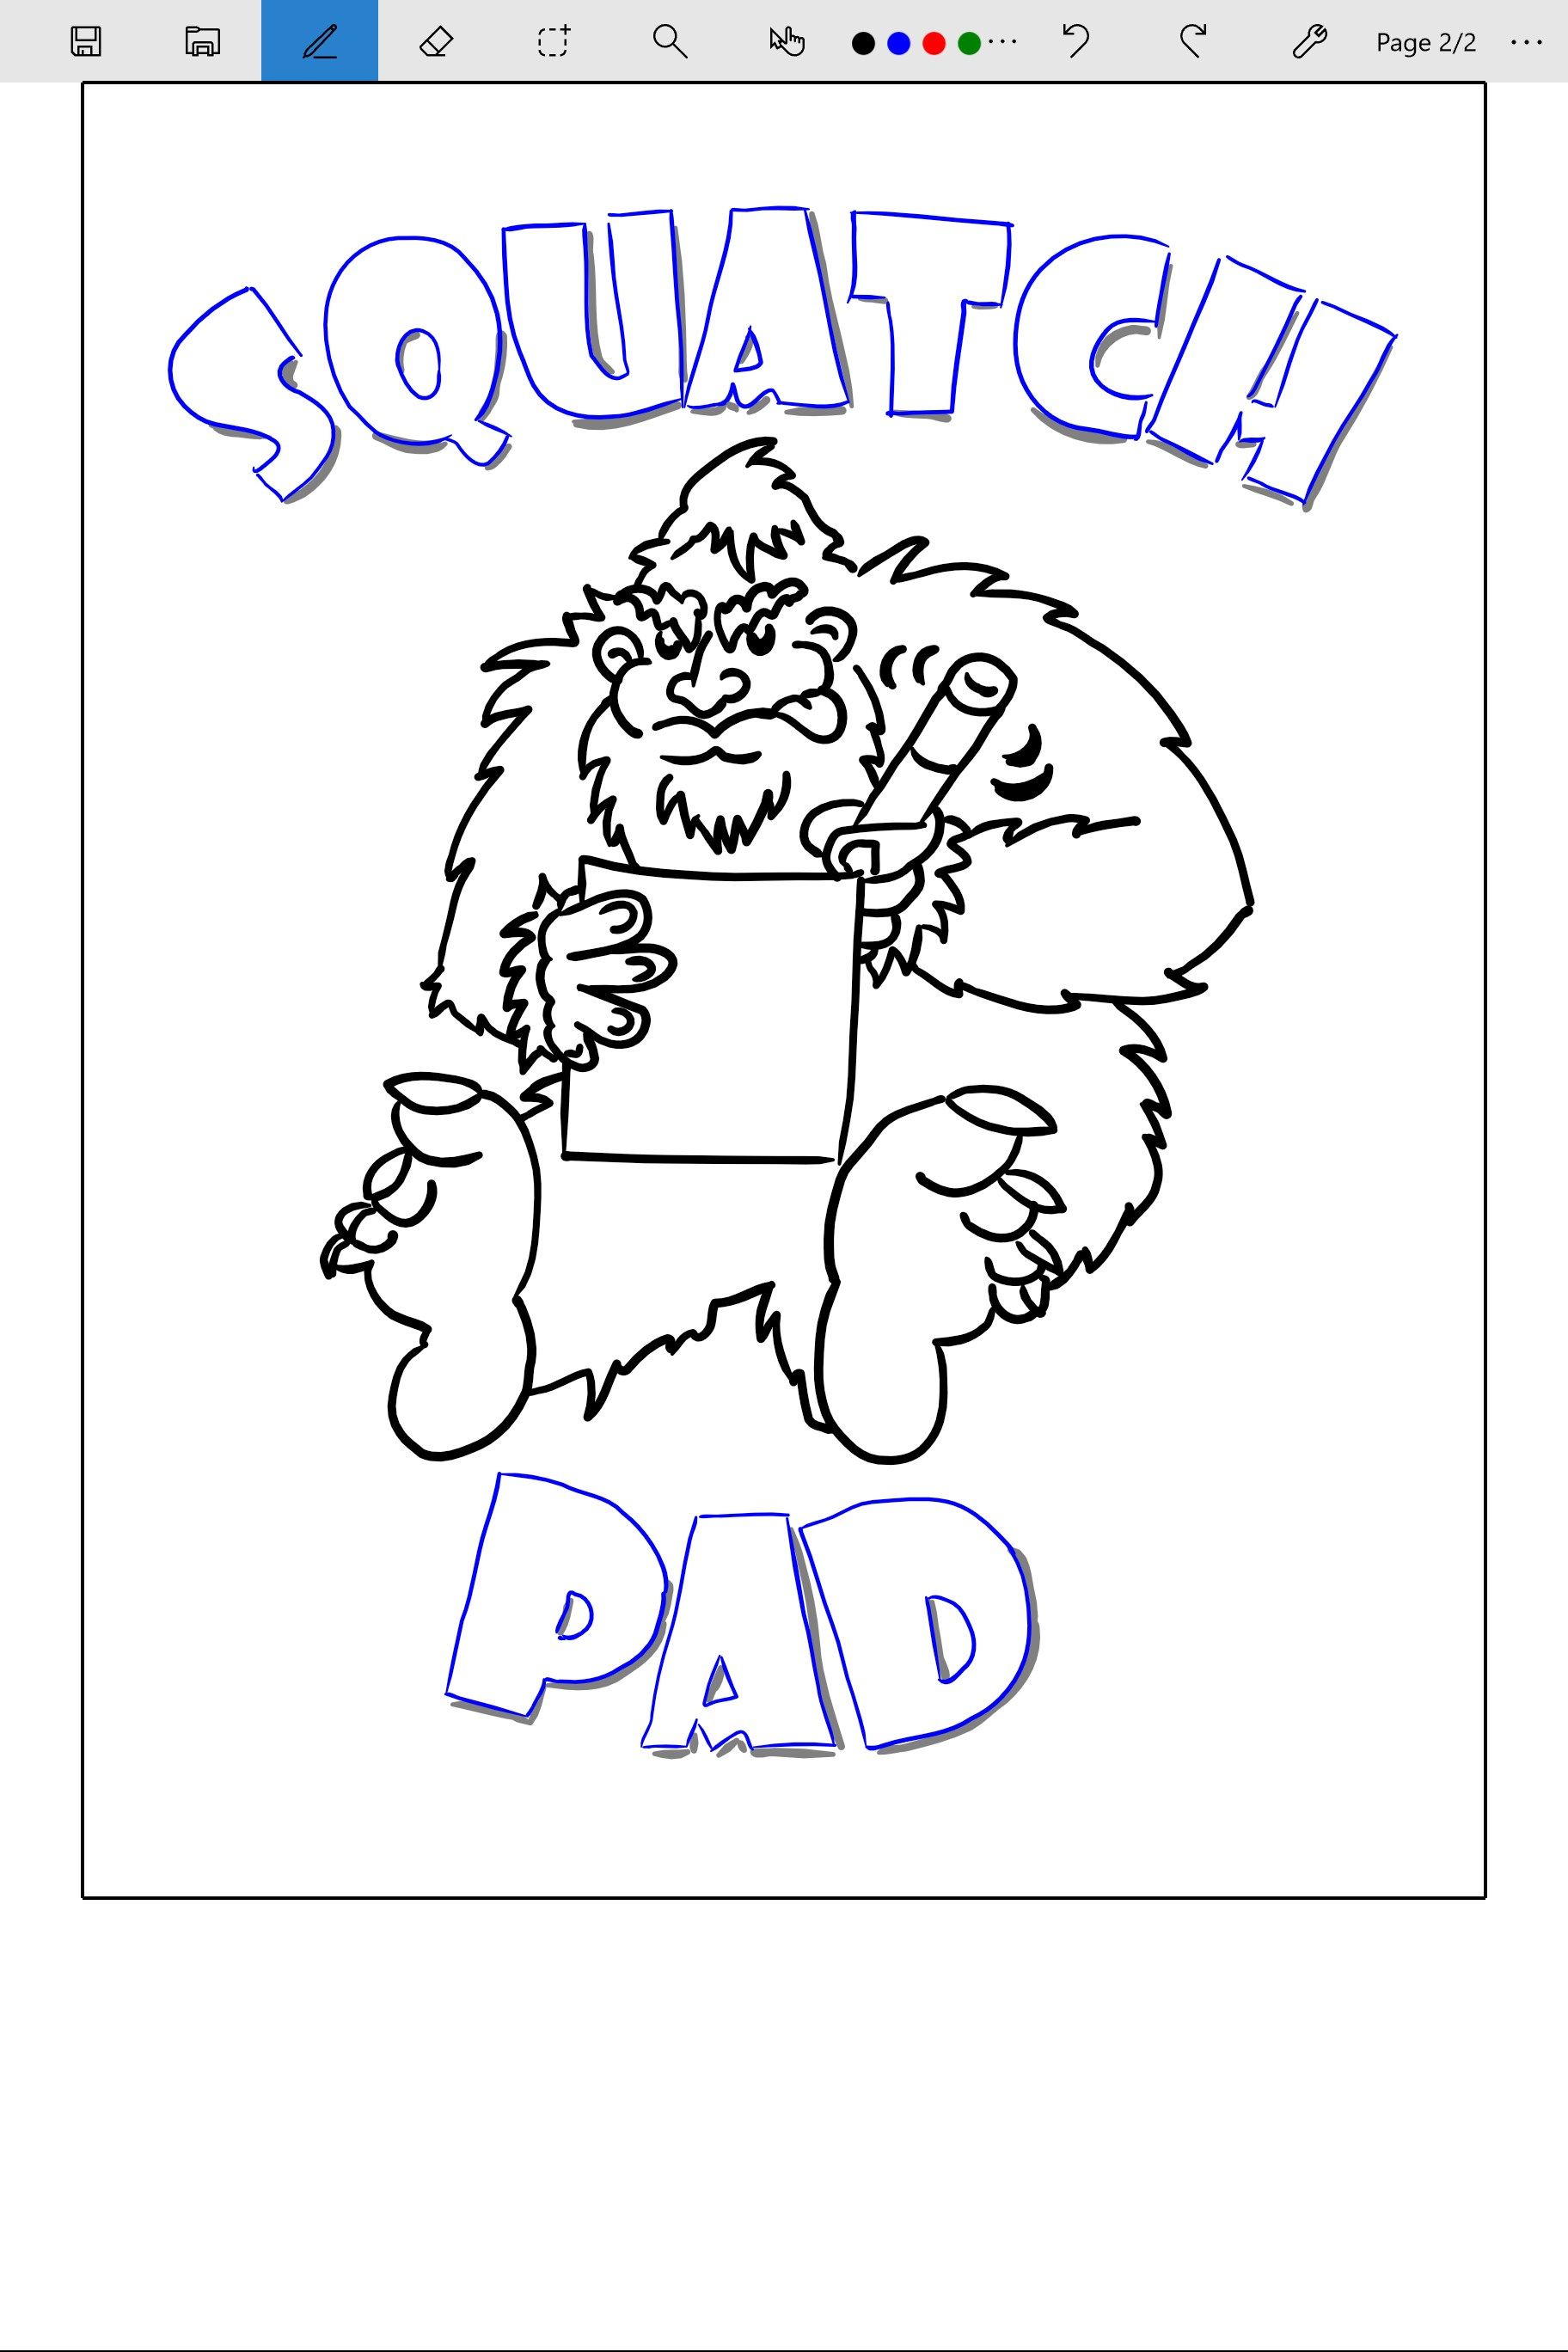 SquatchPad logo drawn in SquatchPad